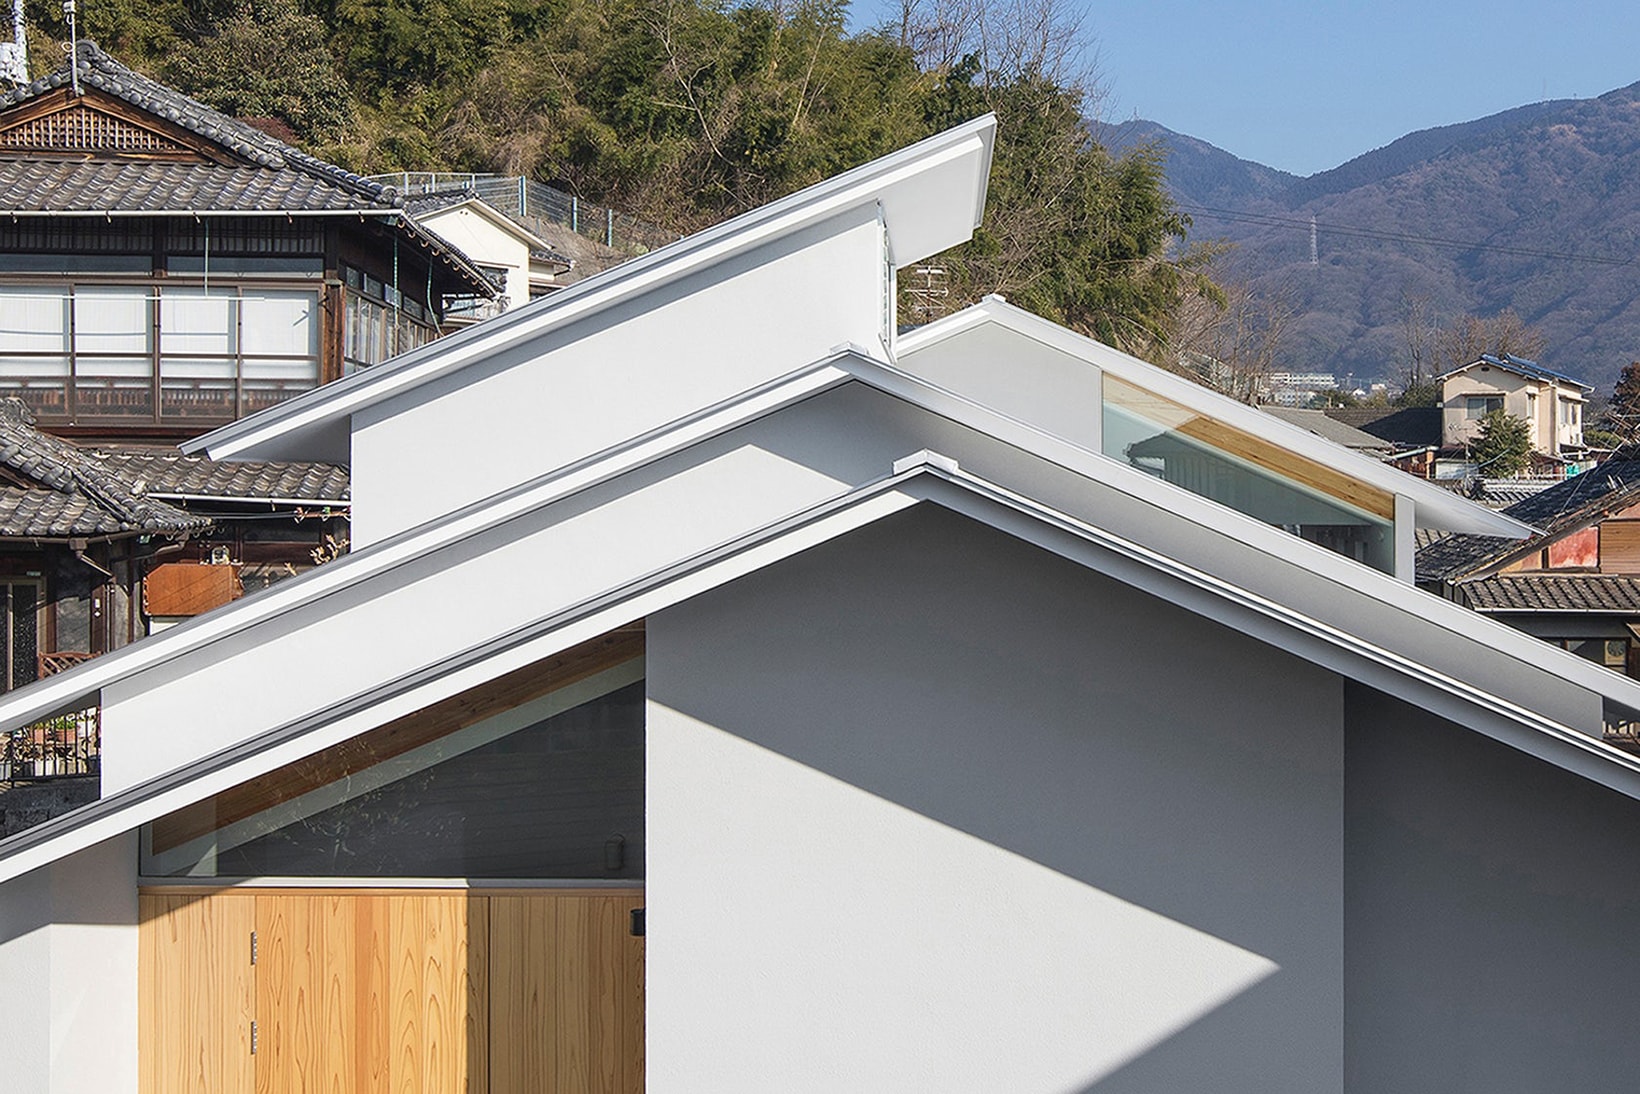 House in Ohue Daisaku Hanamoto Architect Associates Kure Japan 2017 Minimalism